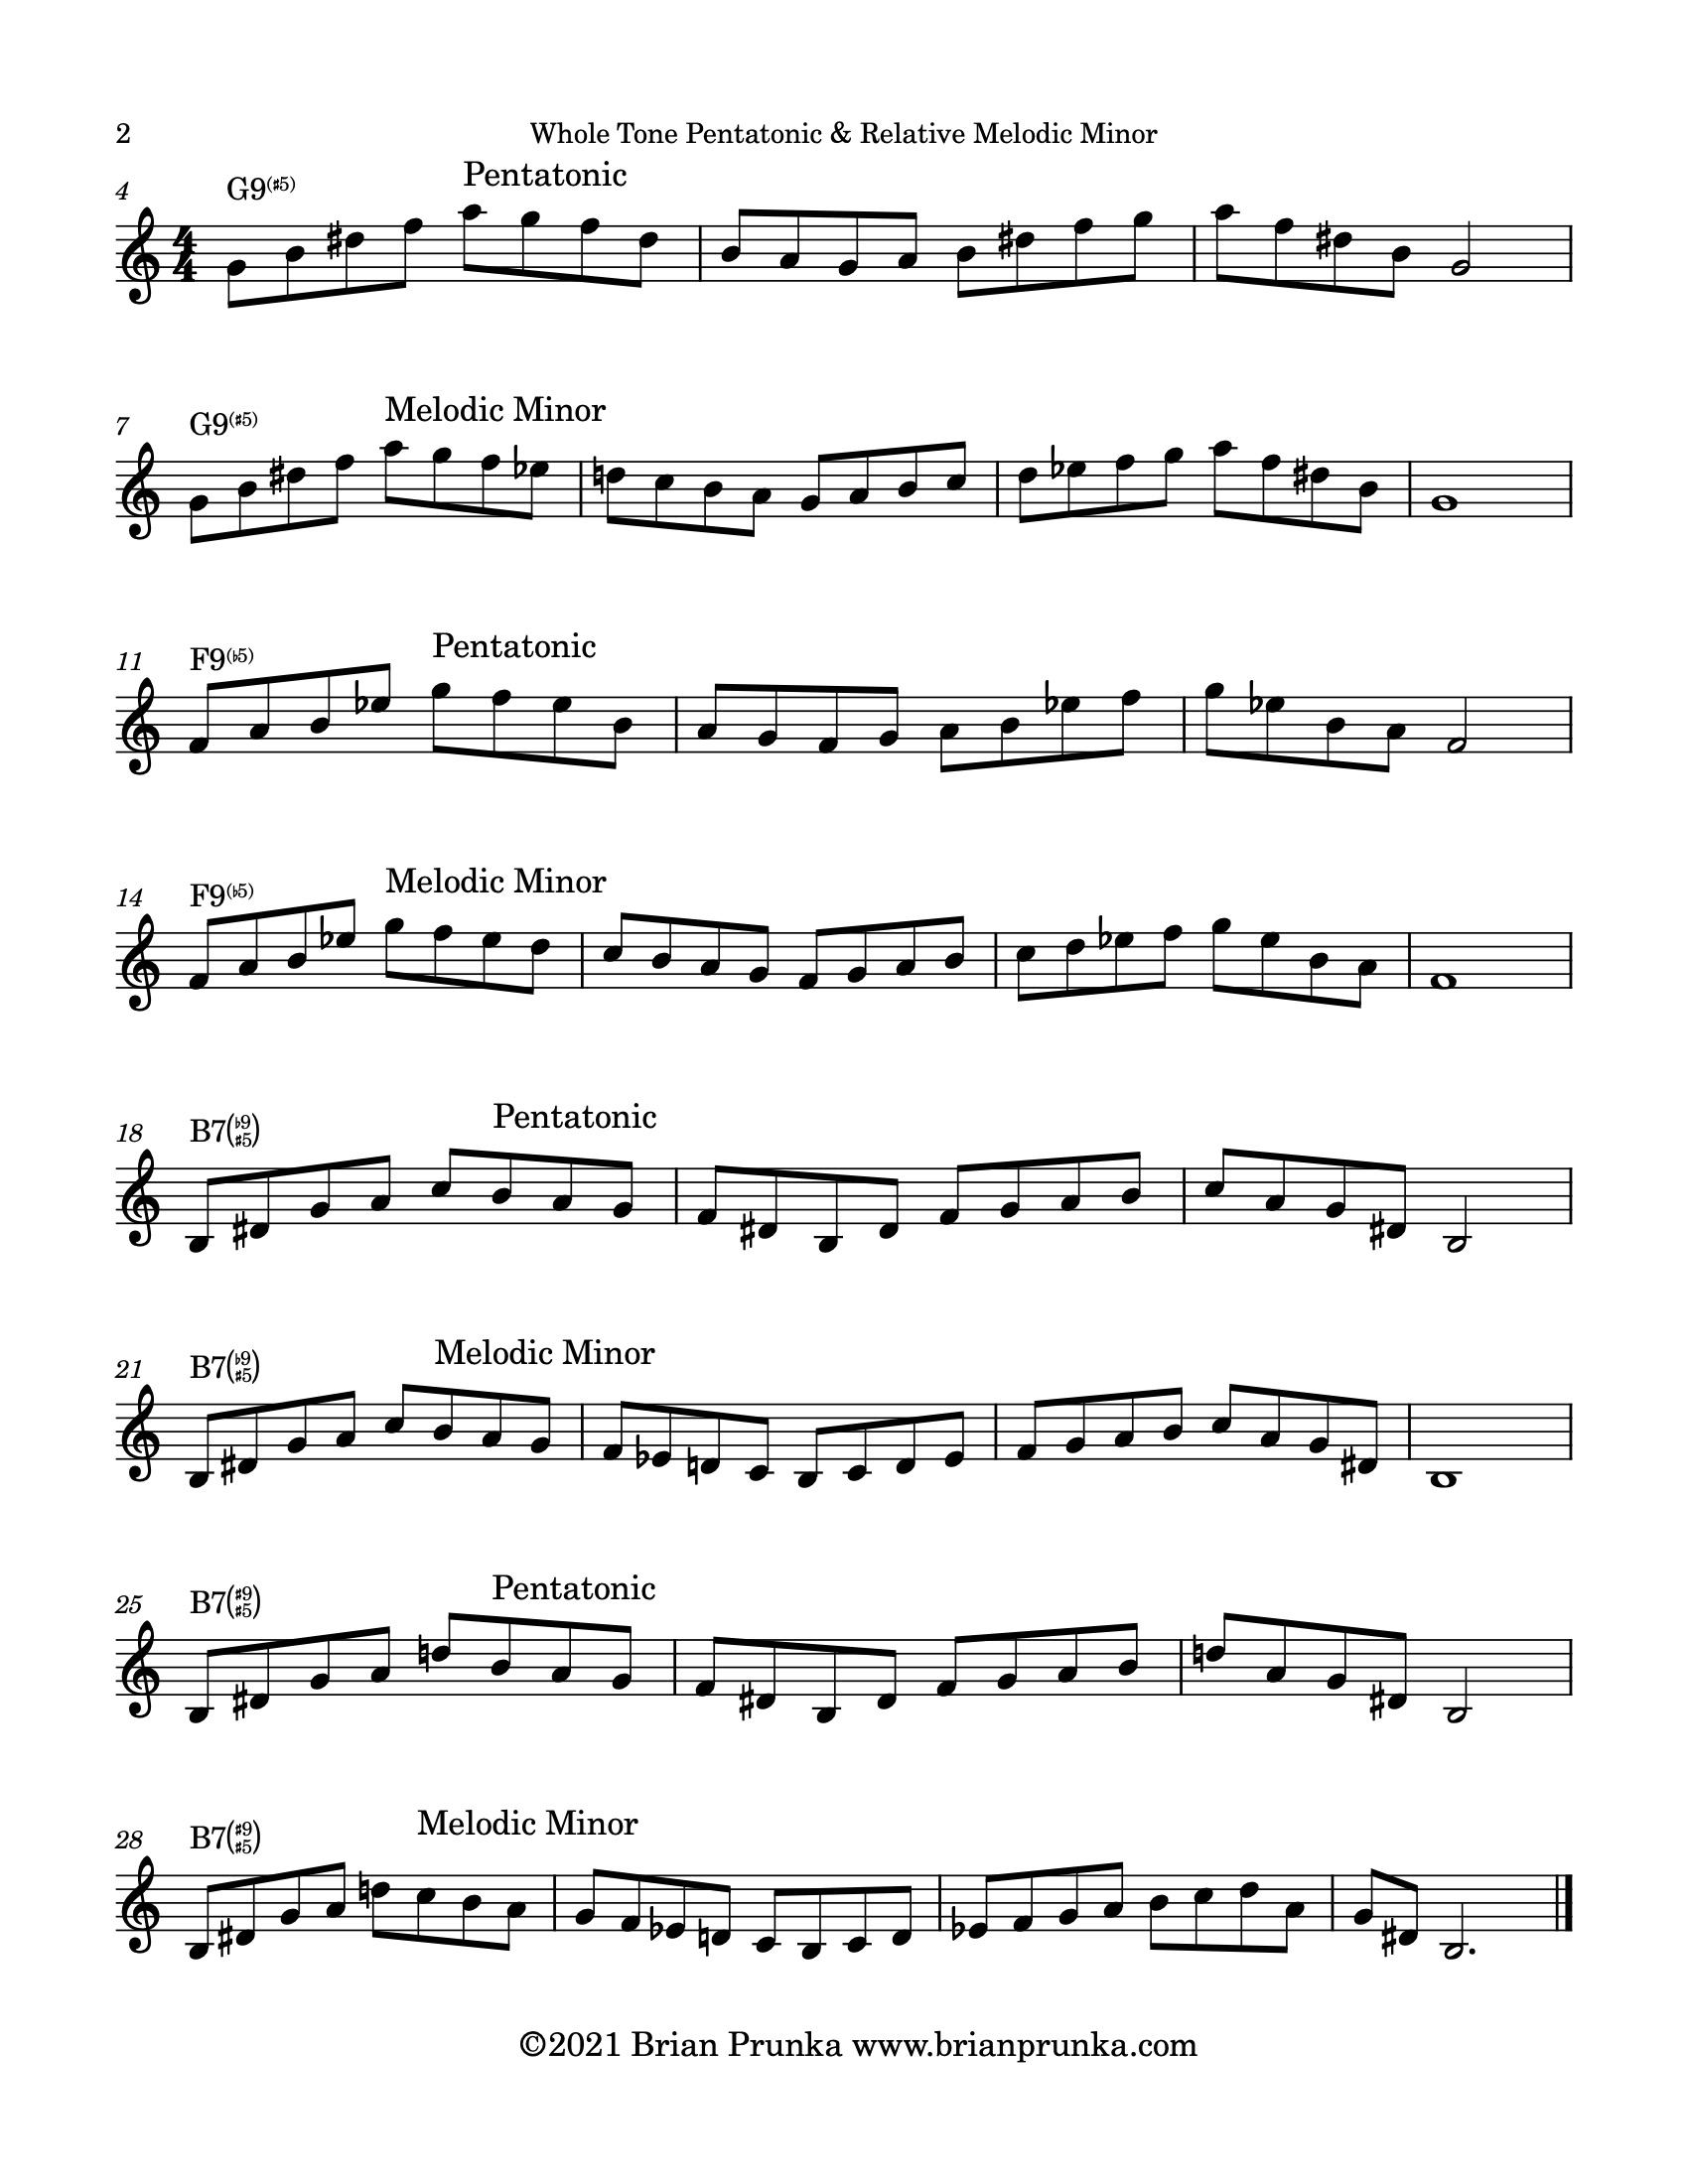 Whole Tone Pentatonic exercises - arpeggios and melodic minor scales